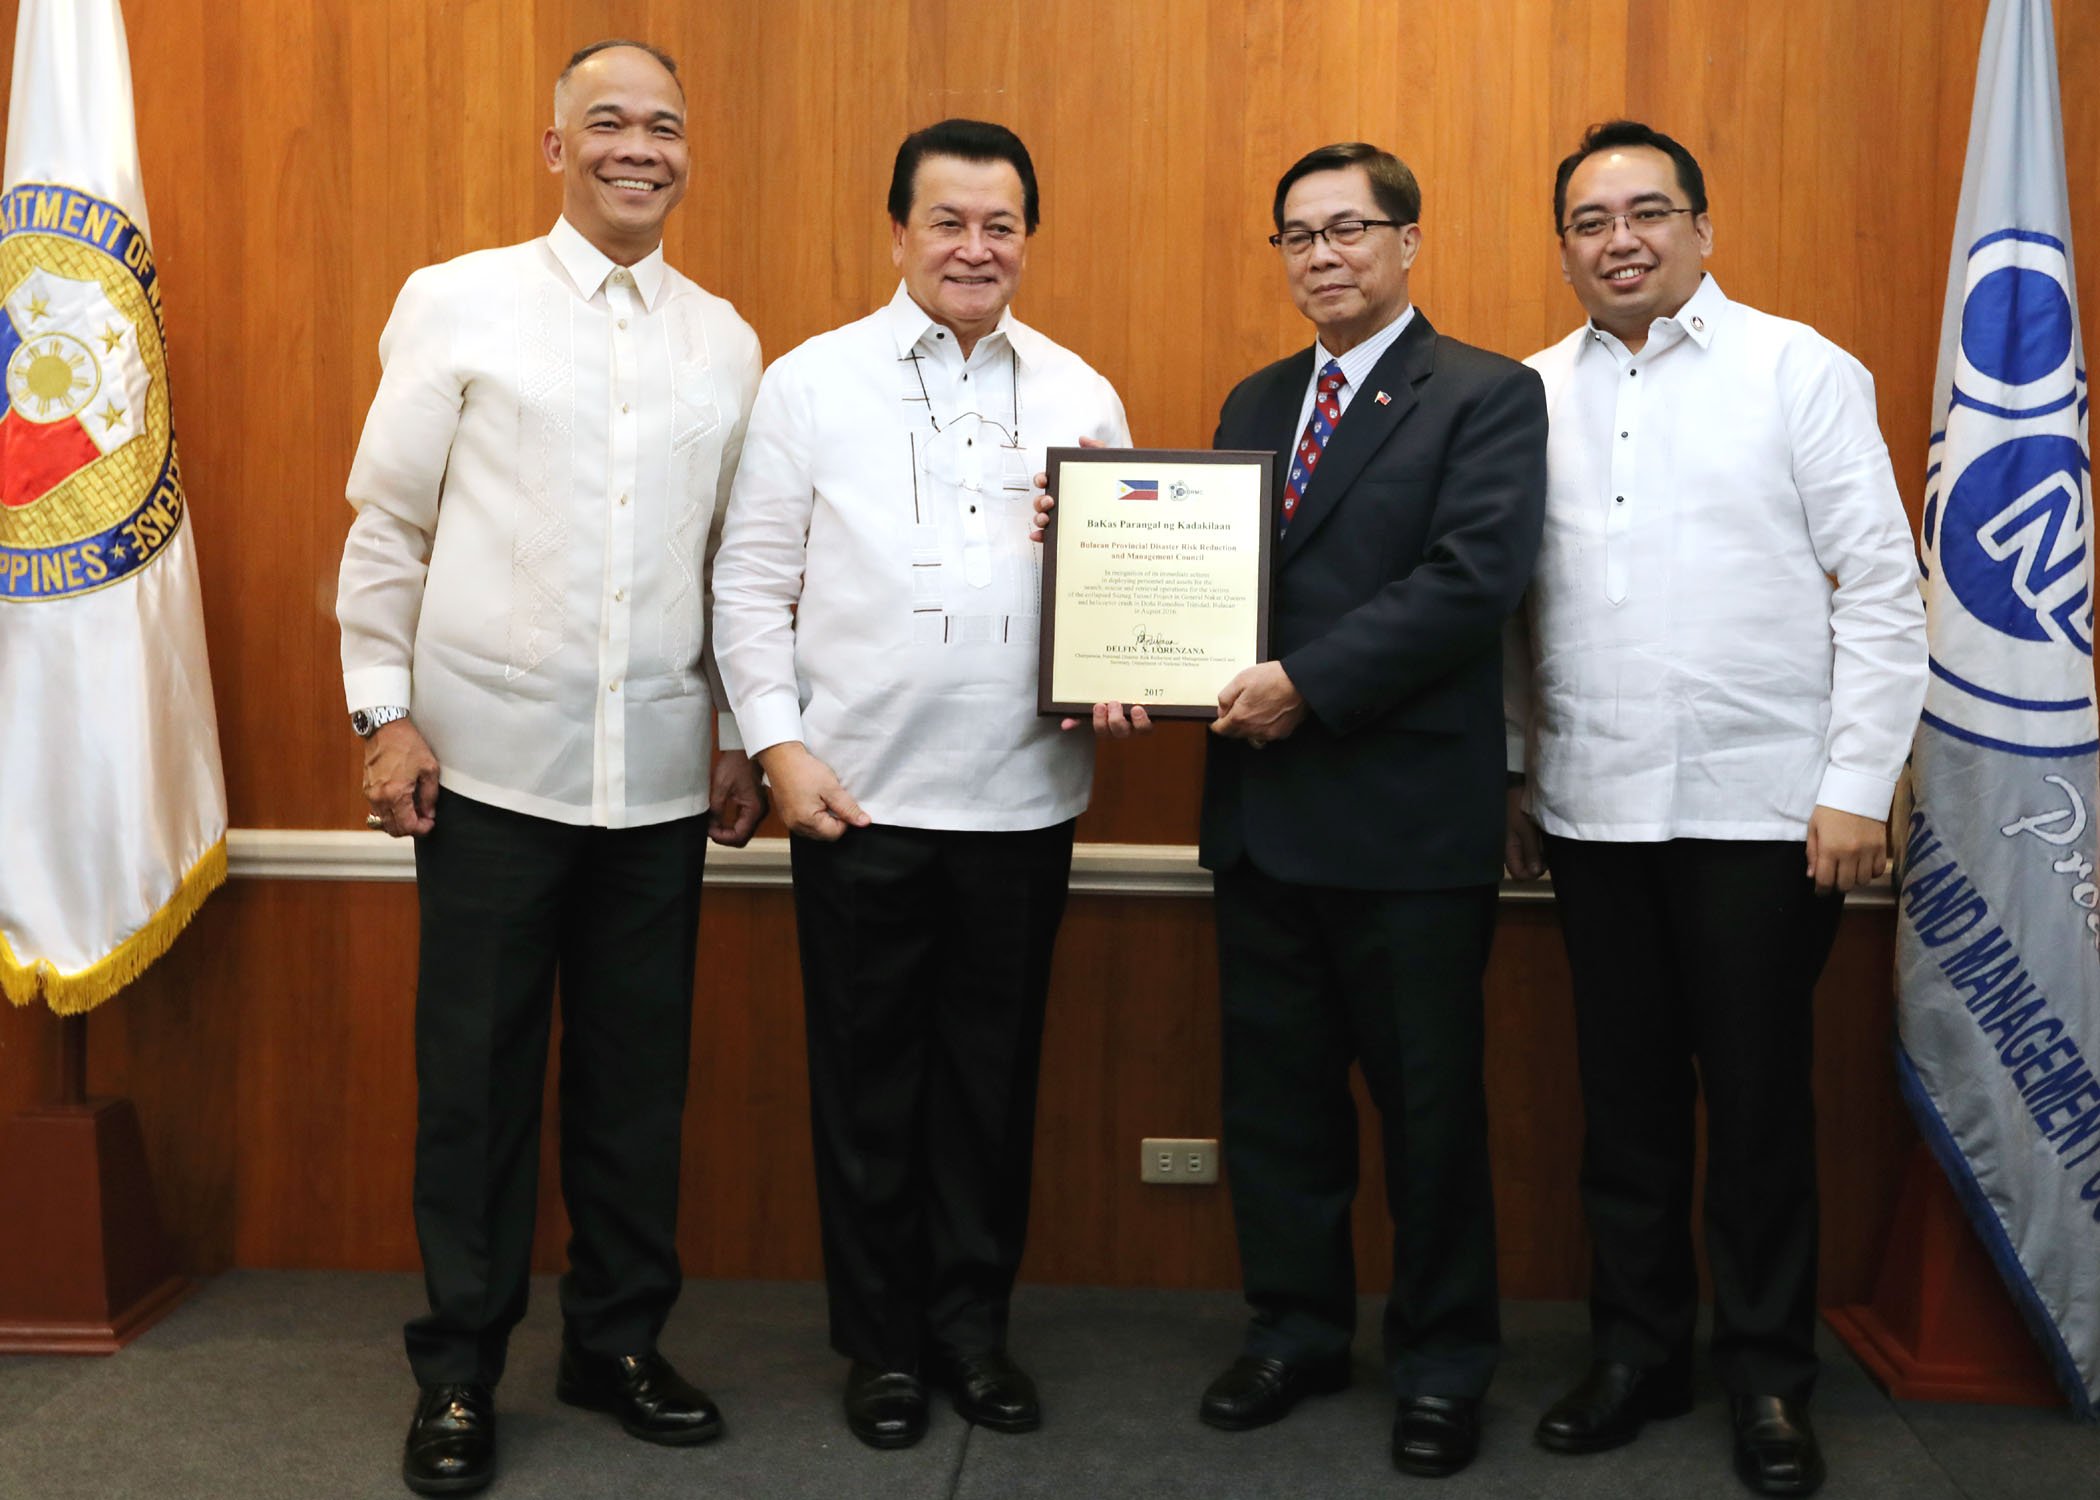 Bulacan, Governor Sy-Alvarado receives the "Bakas Parangal ng Kadakilaan" plaque for Bulacan PDRRMC